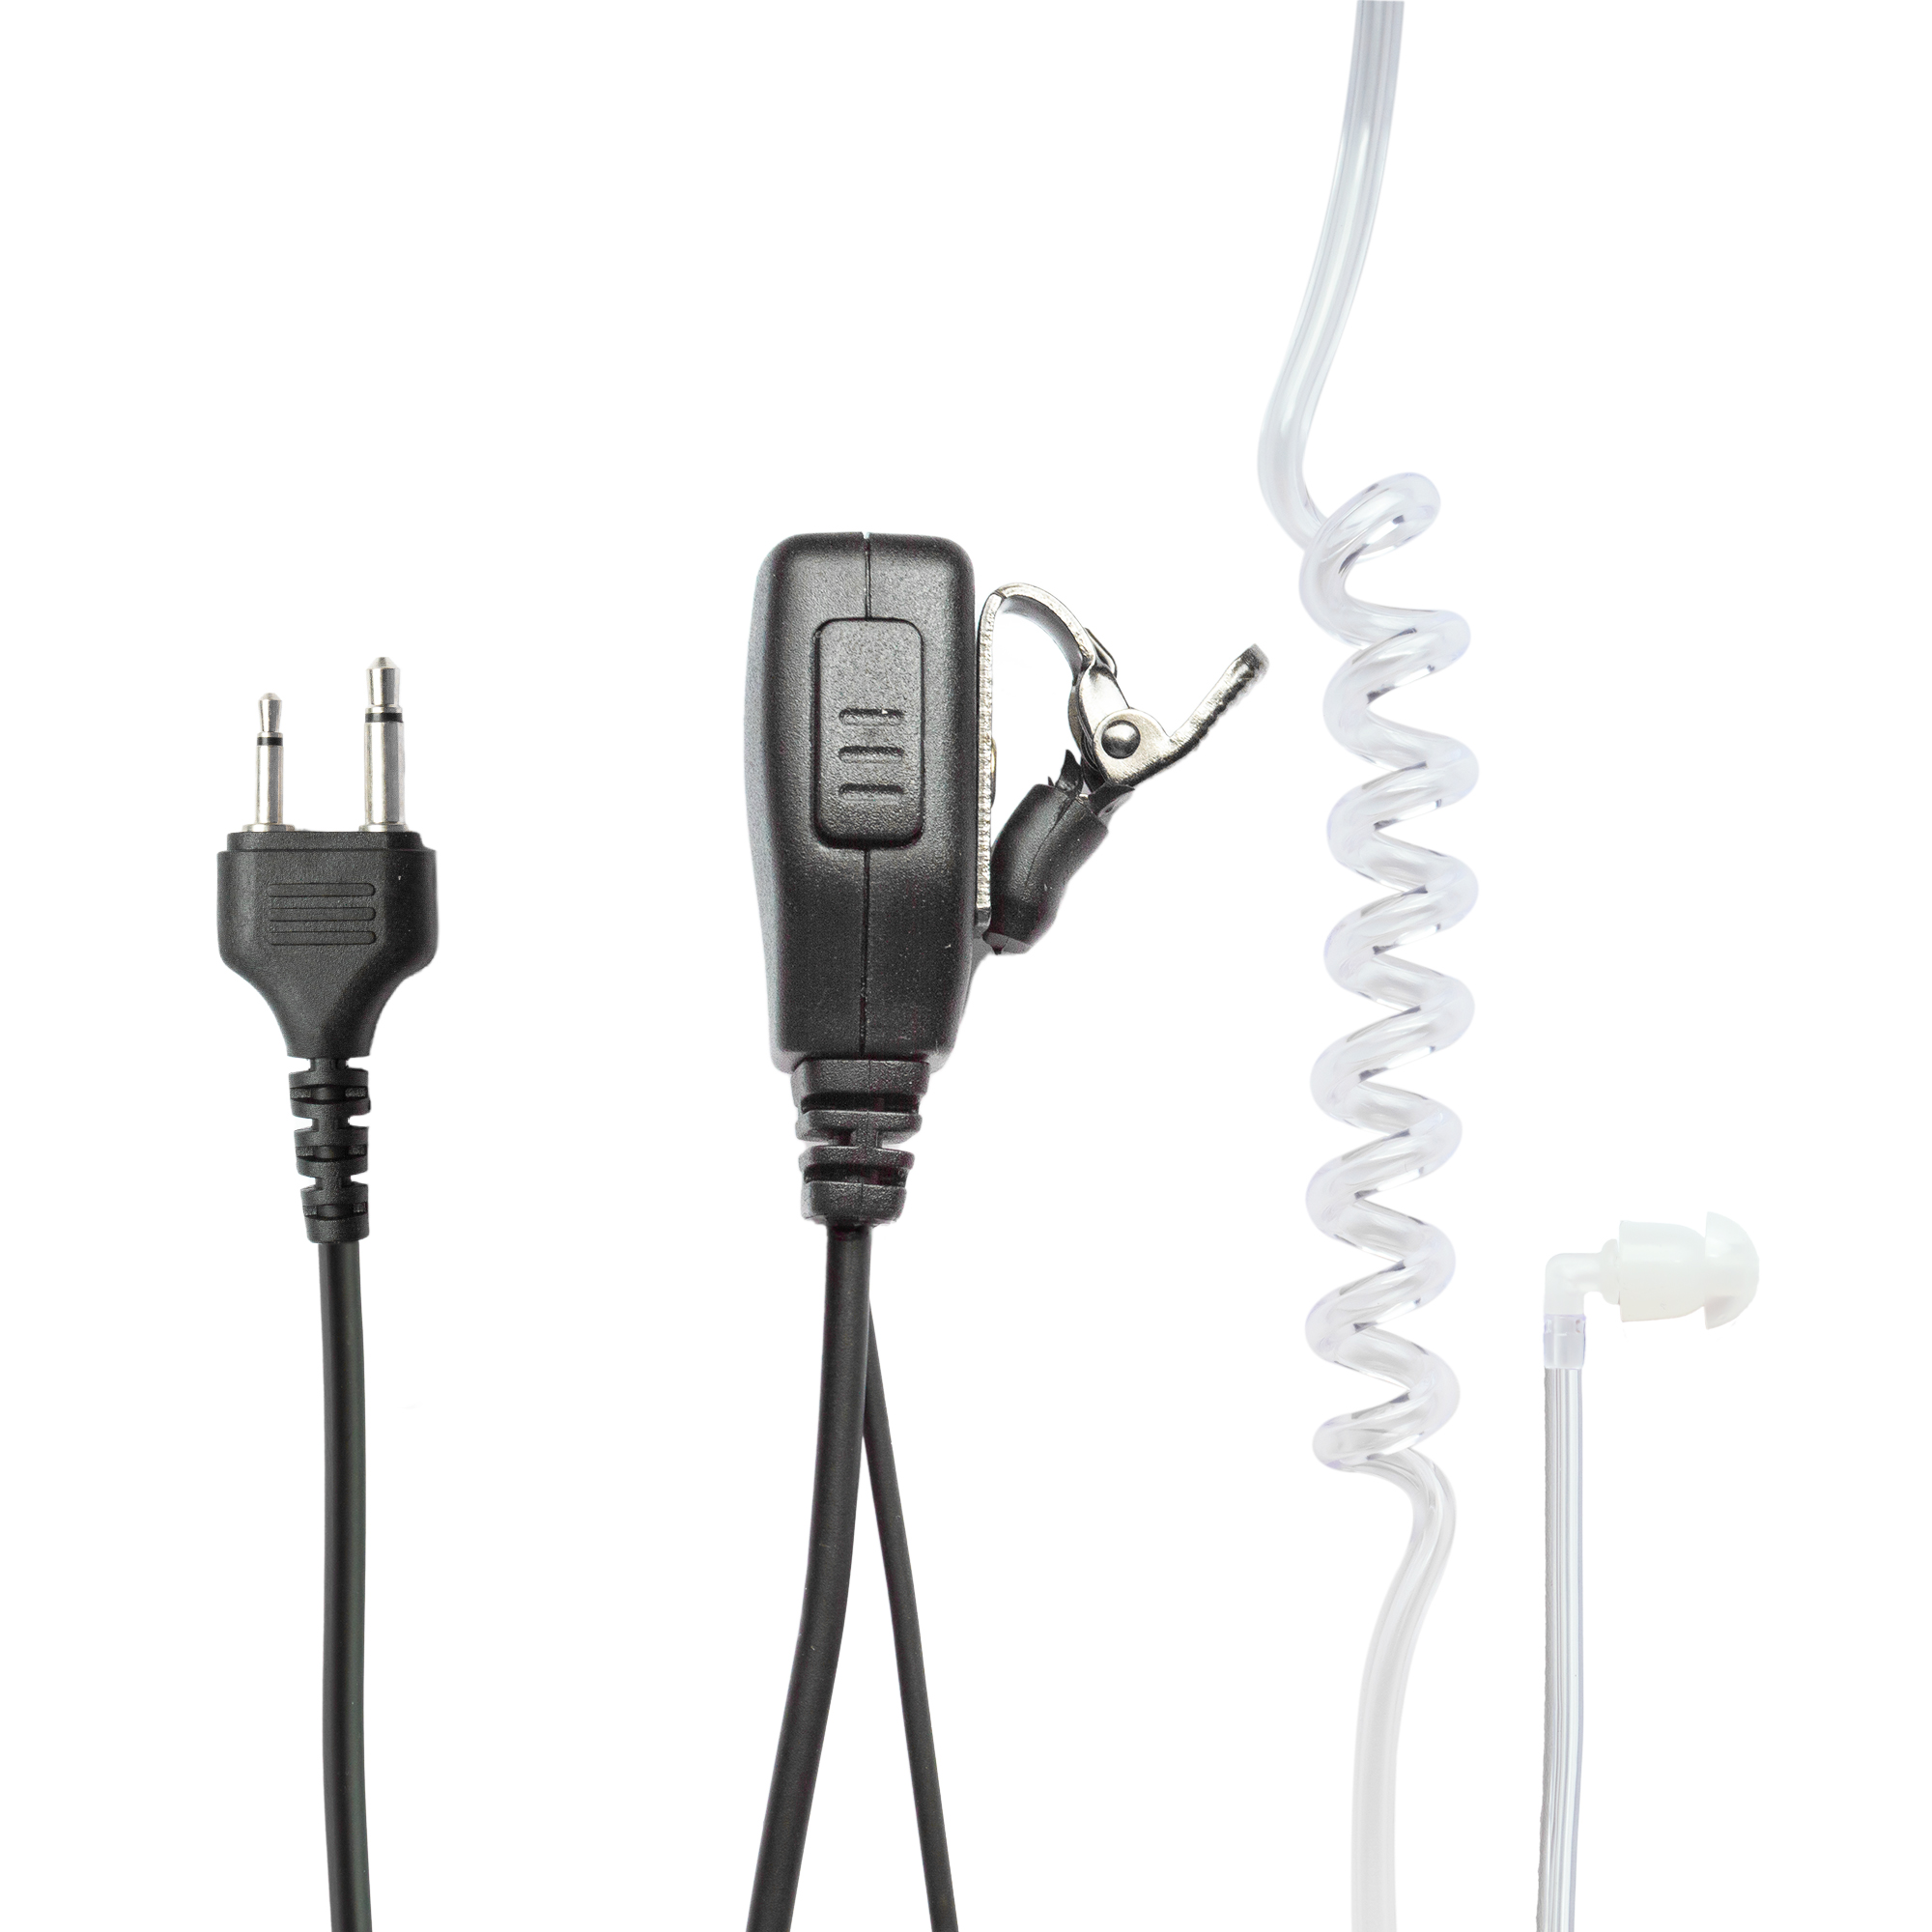 Headset com microfone PNI HF31 com 2 pinos tipo PNI-M